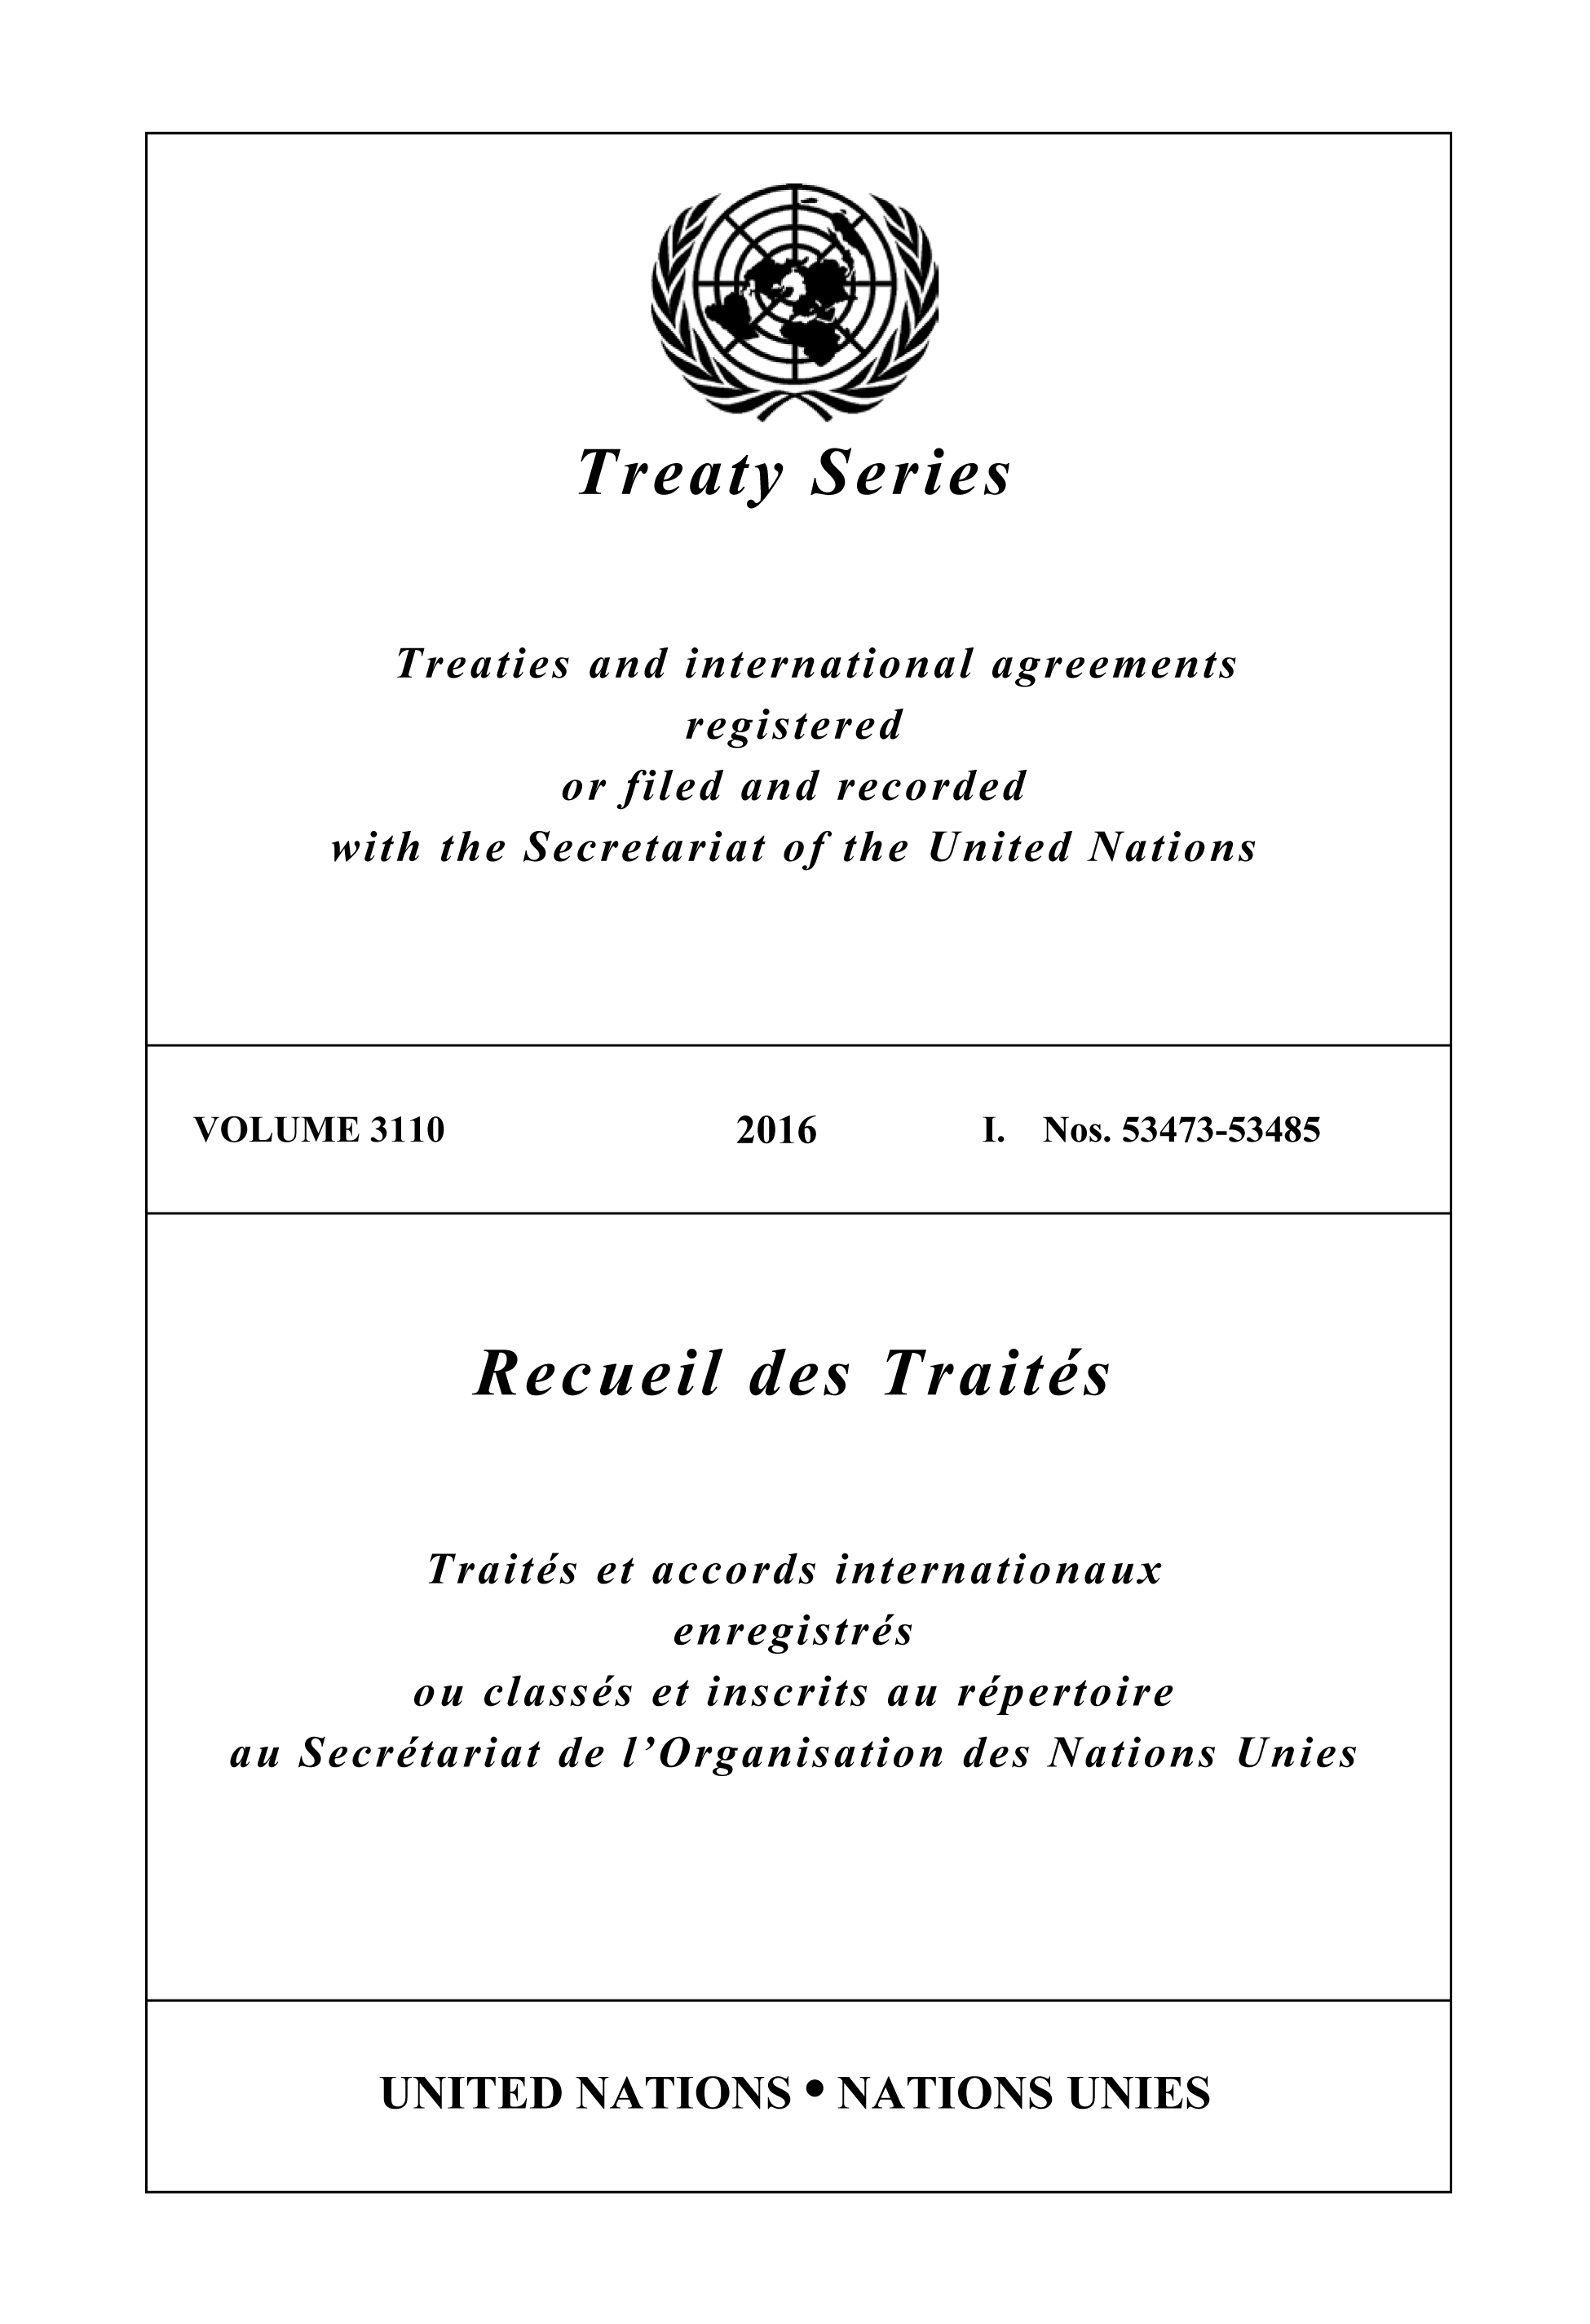 image of Treaty Series 3110